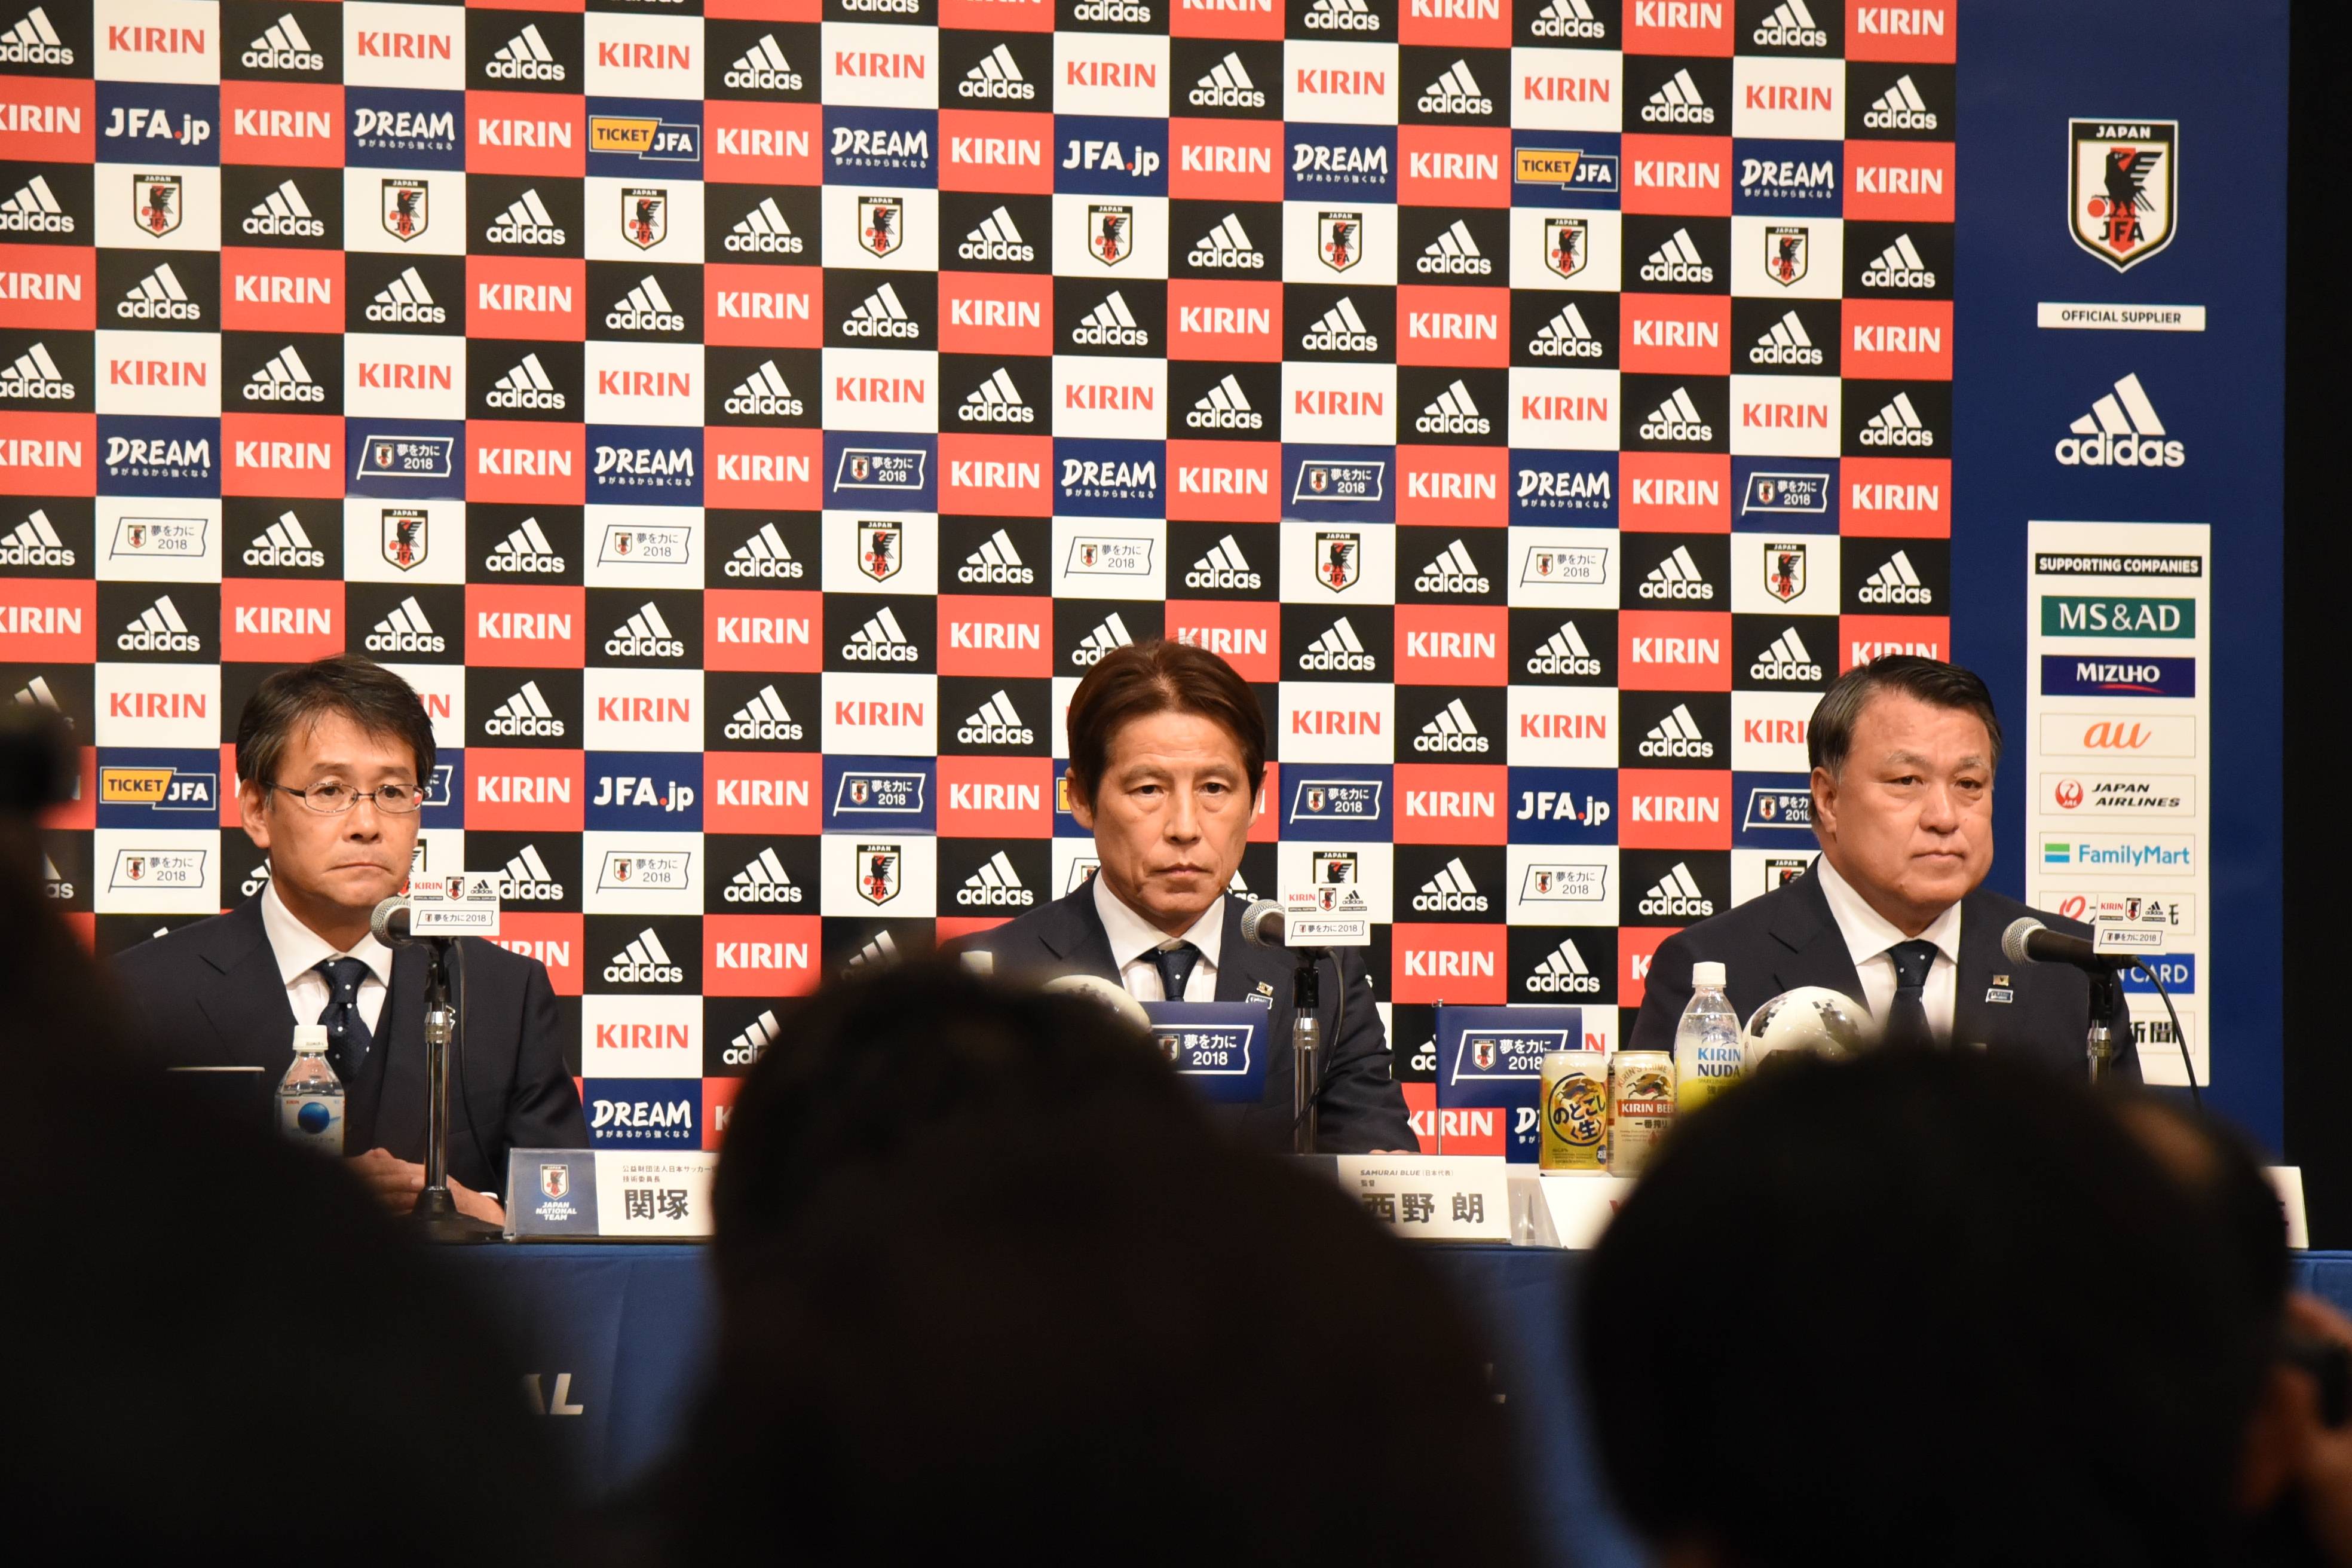 Honda, Kagawa, Okazaki named to Japan’s World Cup squad